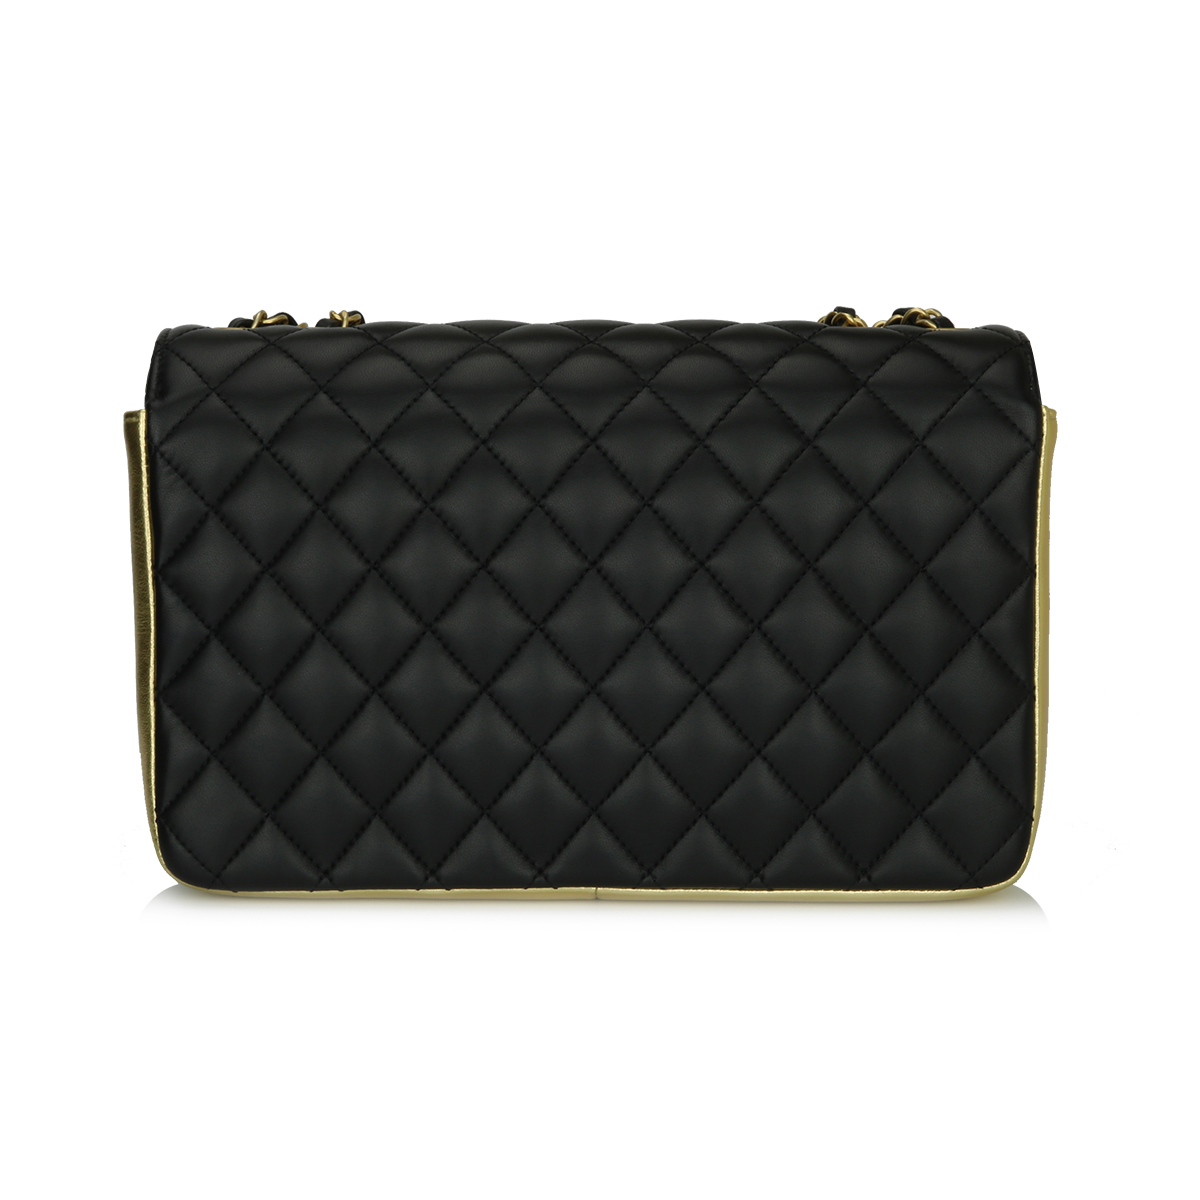 Chanel CC Chic Flap Black Gold Lambskin Brushed Gold Hardware 2019 - Image 4 of 5